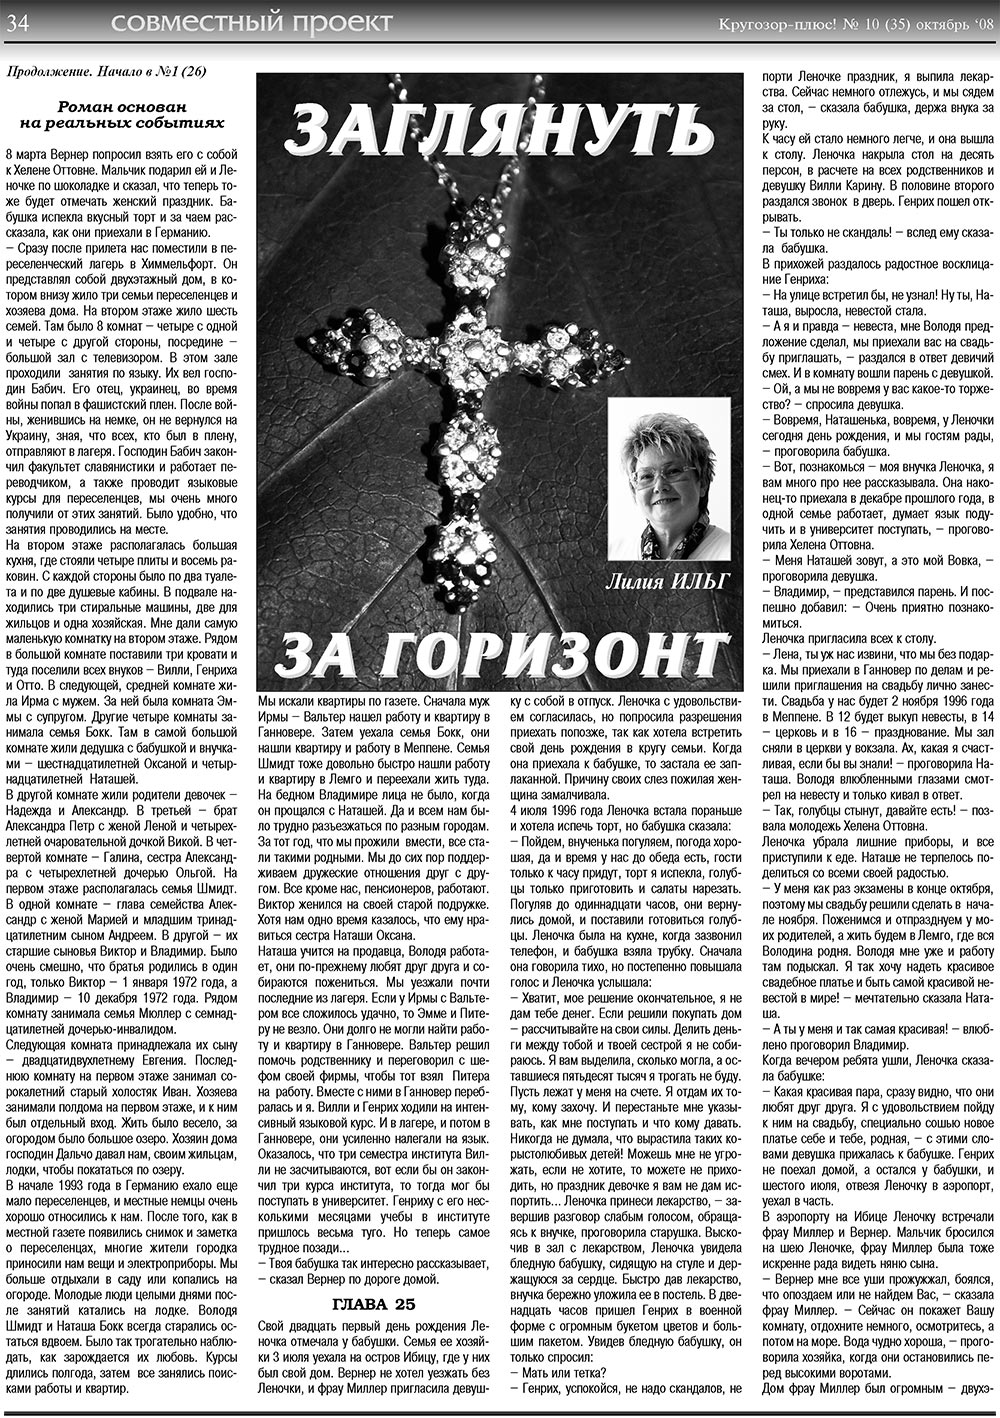 Кругозор плюс! (газета). 2008 год, номер 10, стр. 34